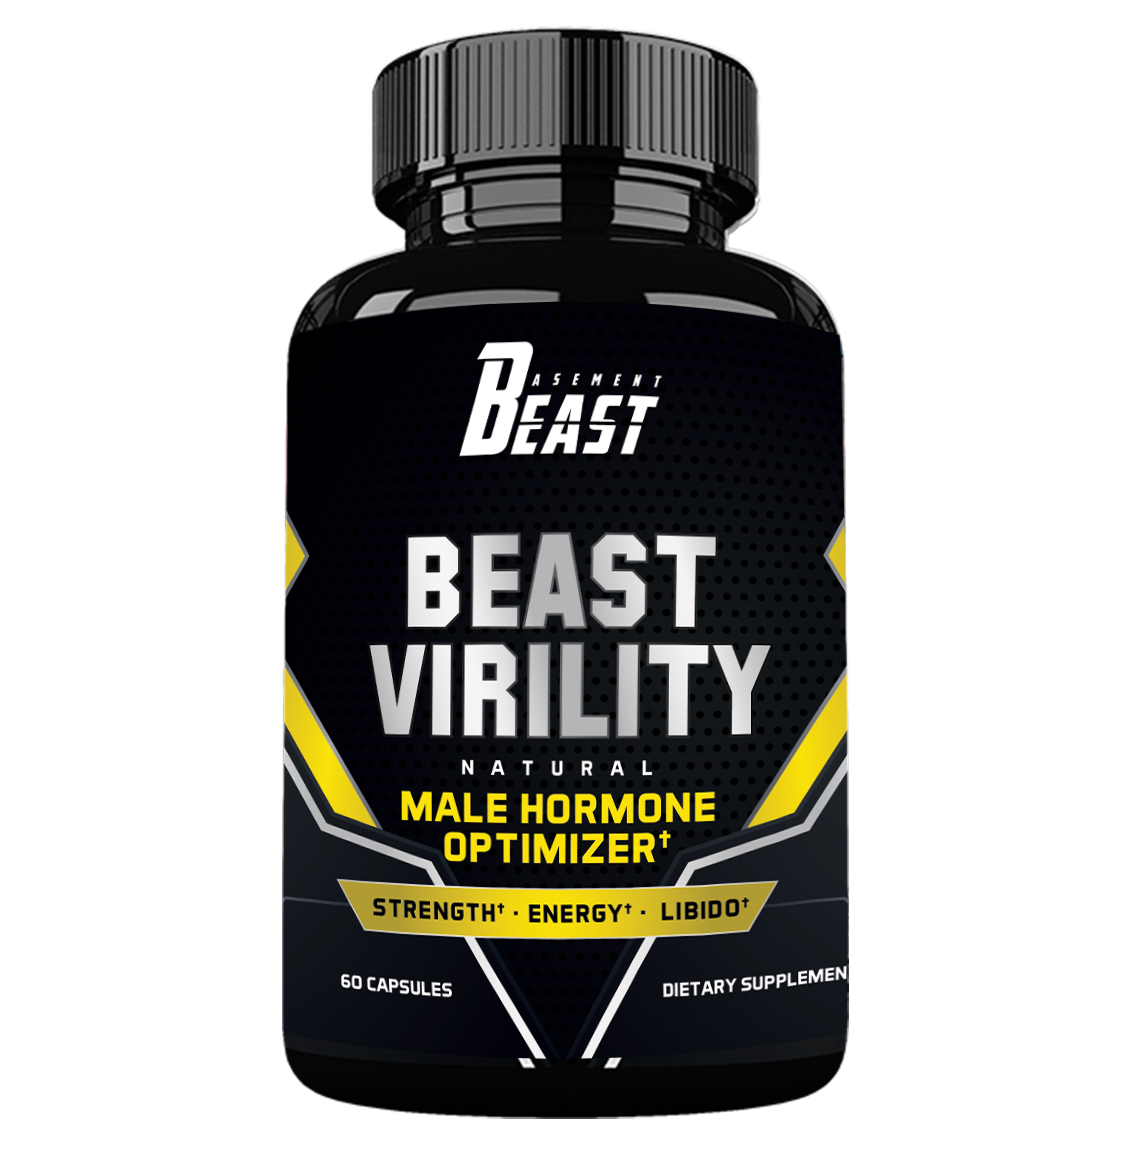 Beast Virility